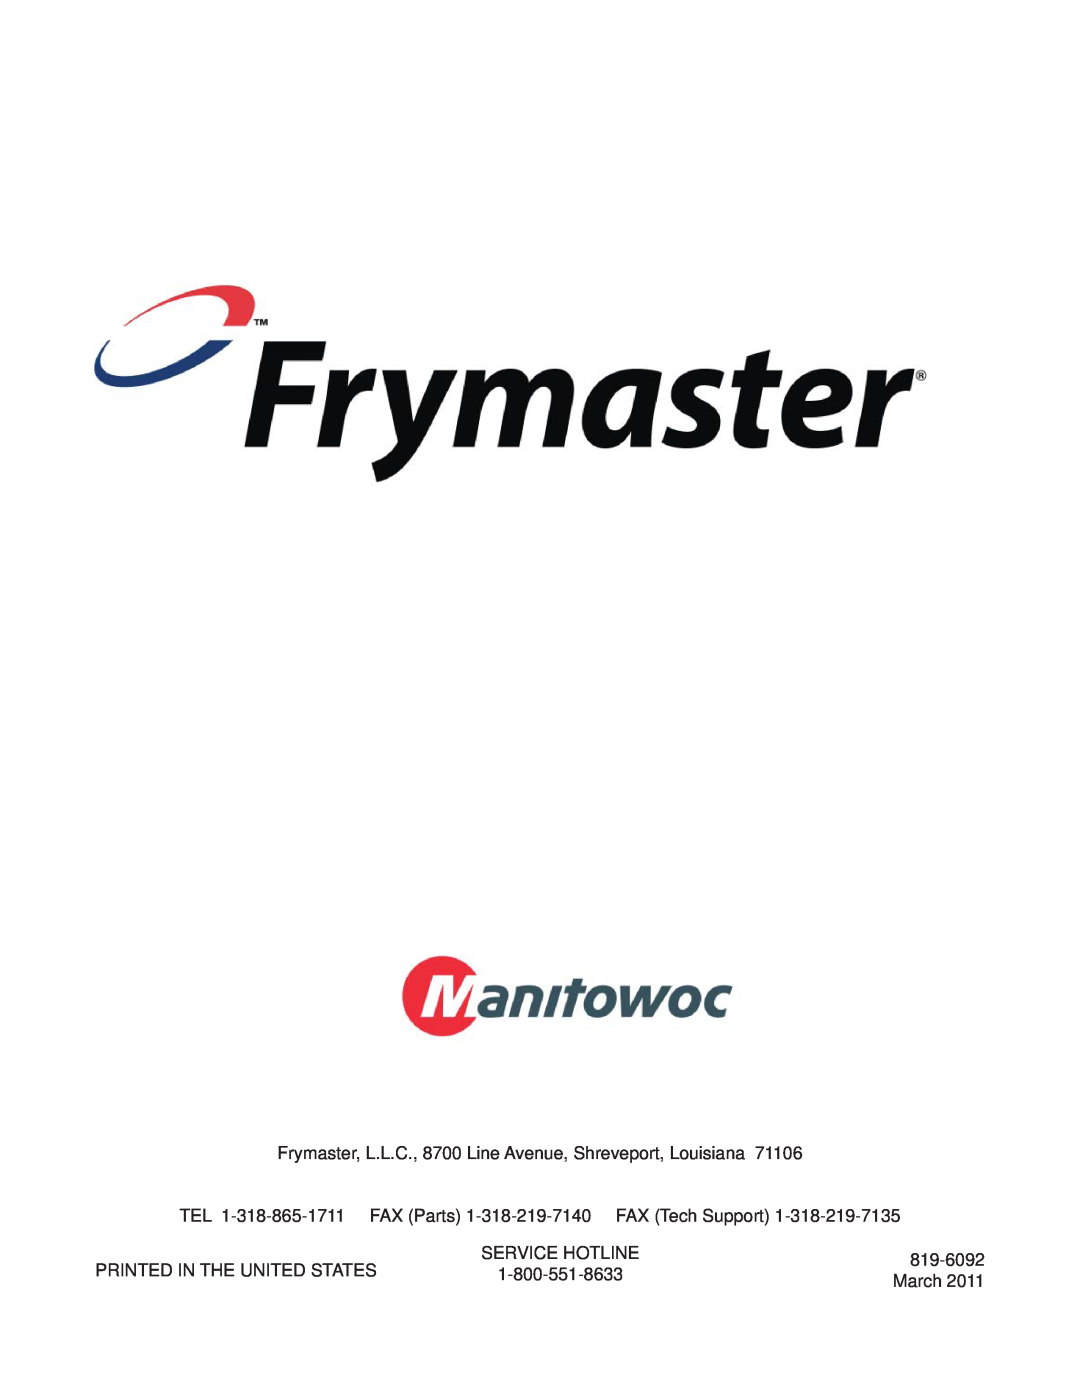 Frymaster 35, 45 manual Service Hotline, 819-6092, March 